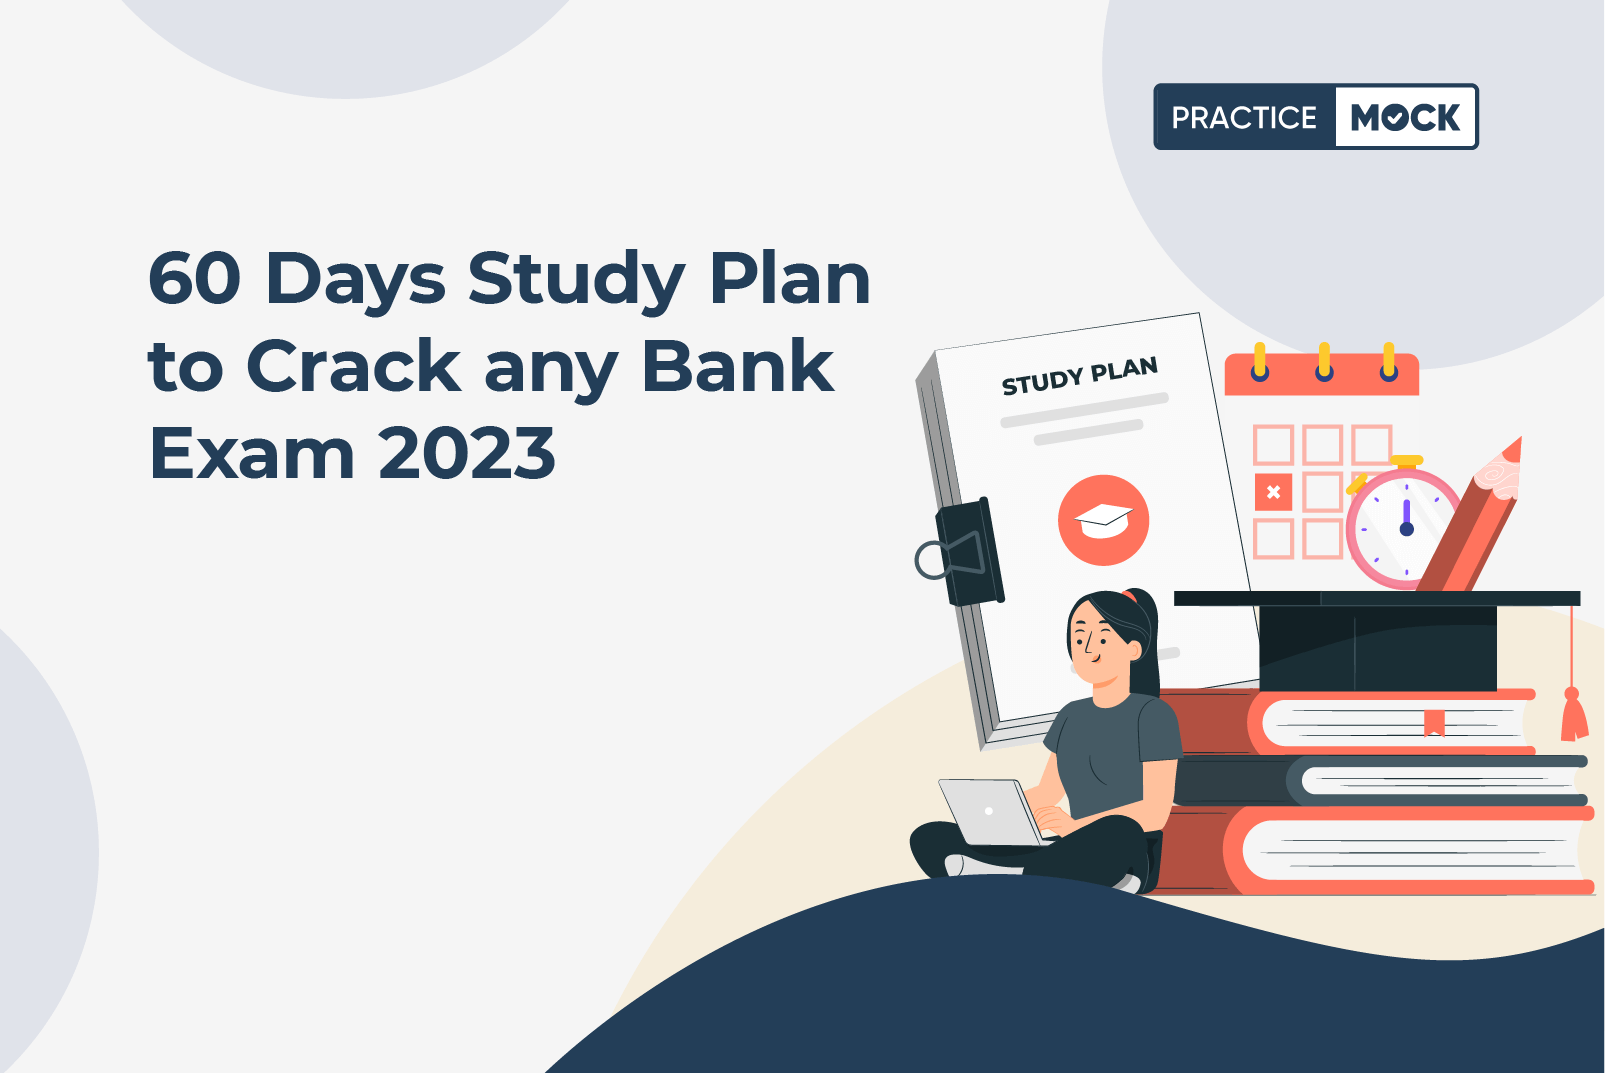 60 Days Study Plan to Crack any Bank Exam 2023